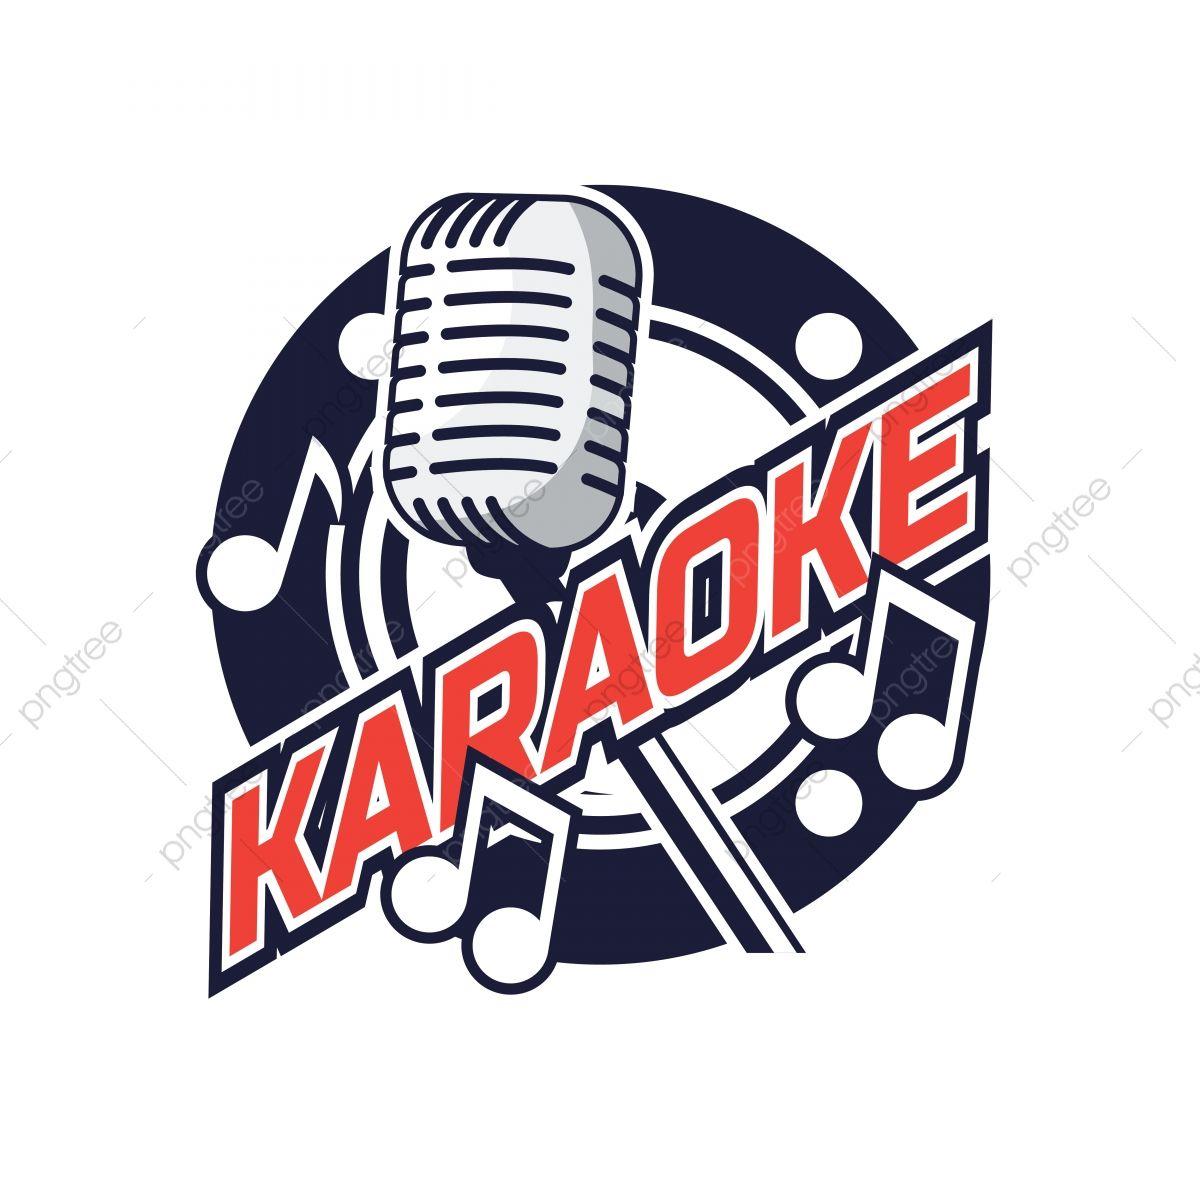 Karaoke Logo - Karaoke Logo, Vector Illustration, Karaoke Party, Karaoke Night ...